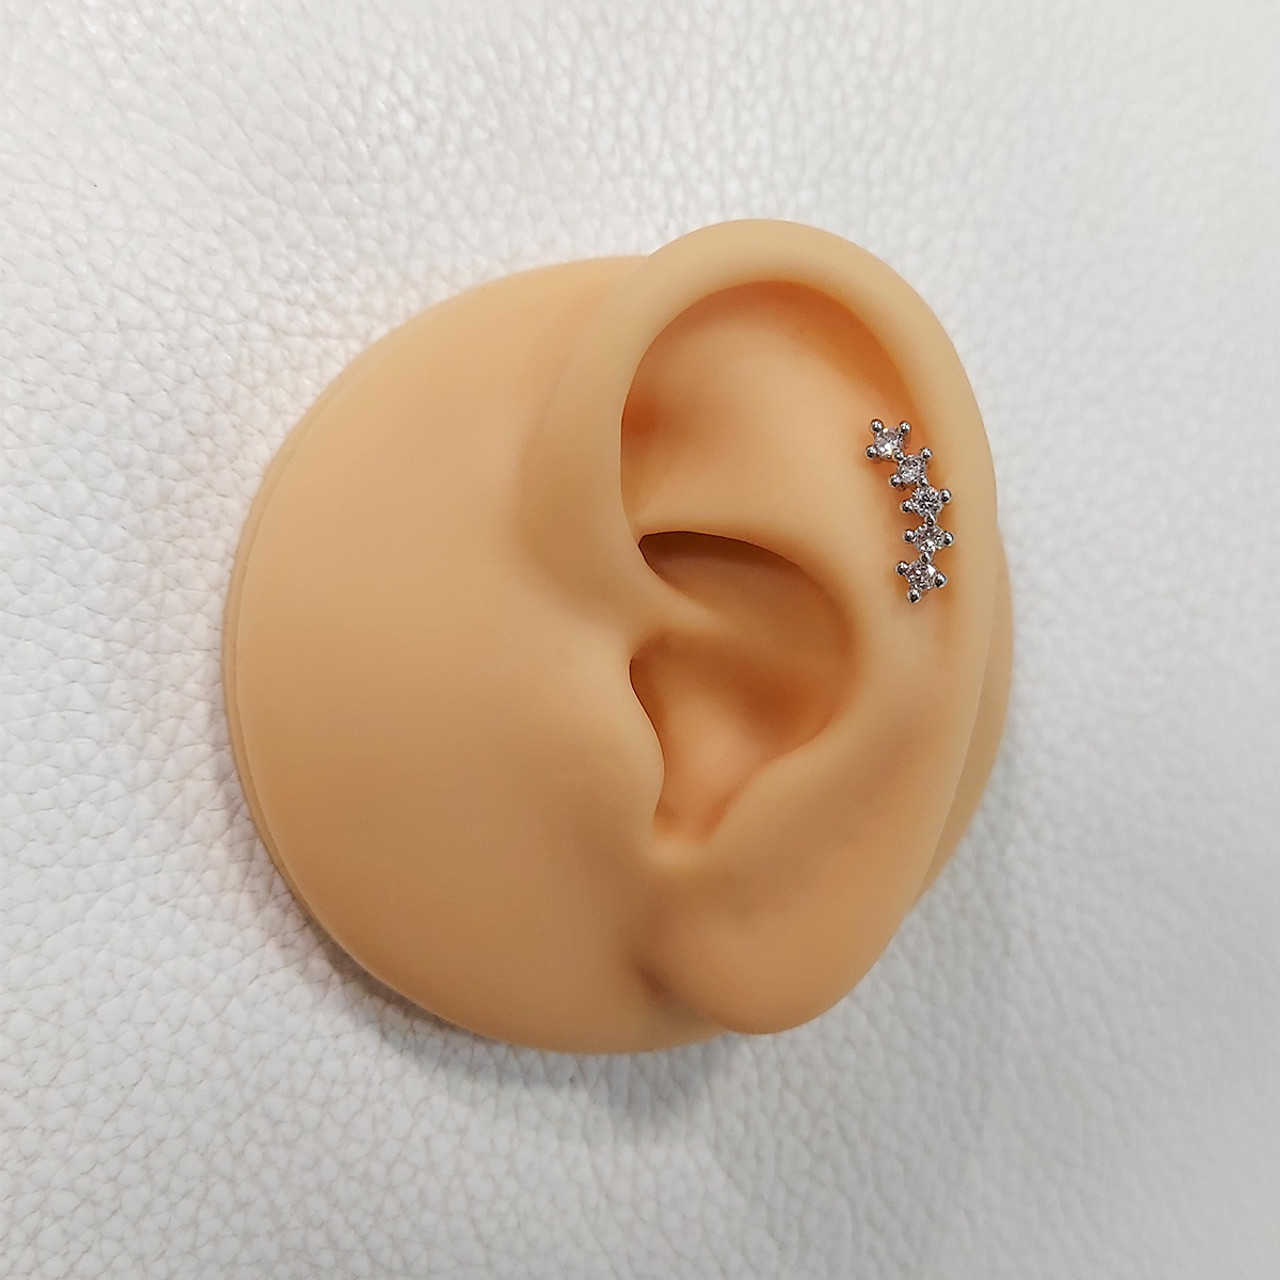 ear cartilage piercing tragus